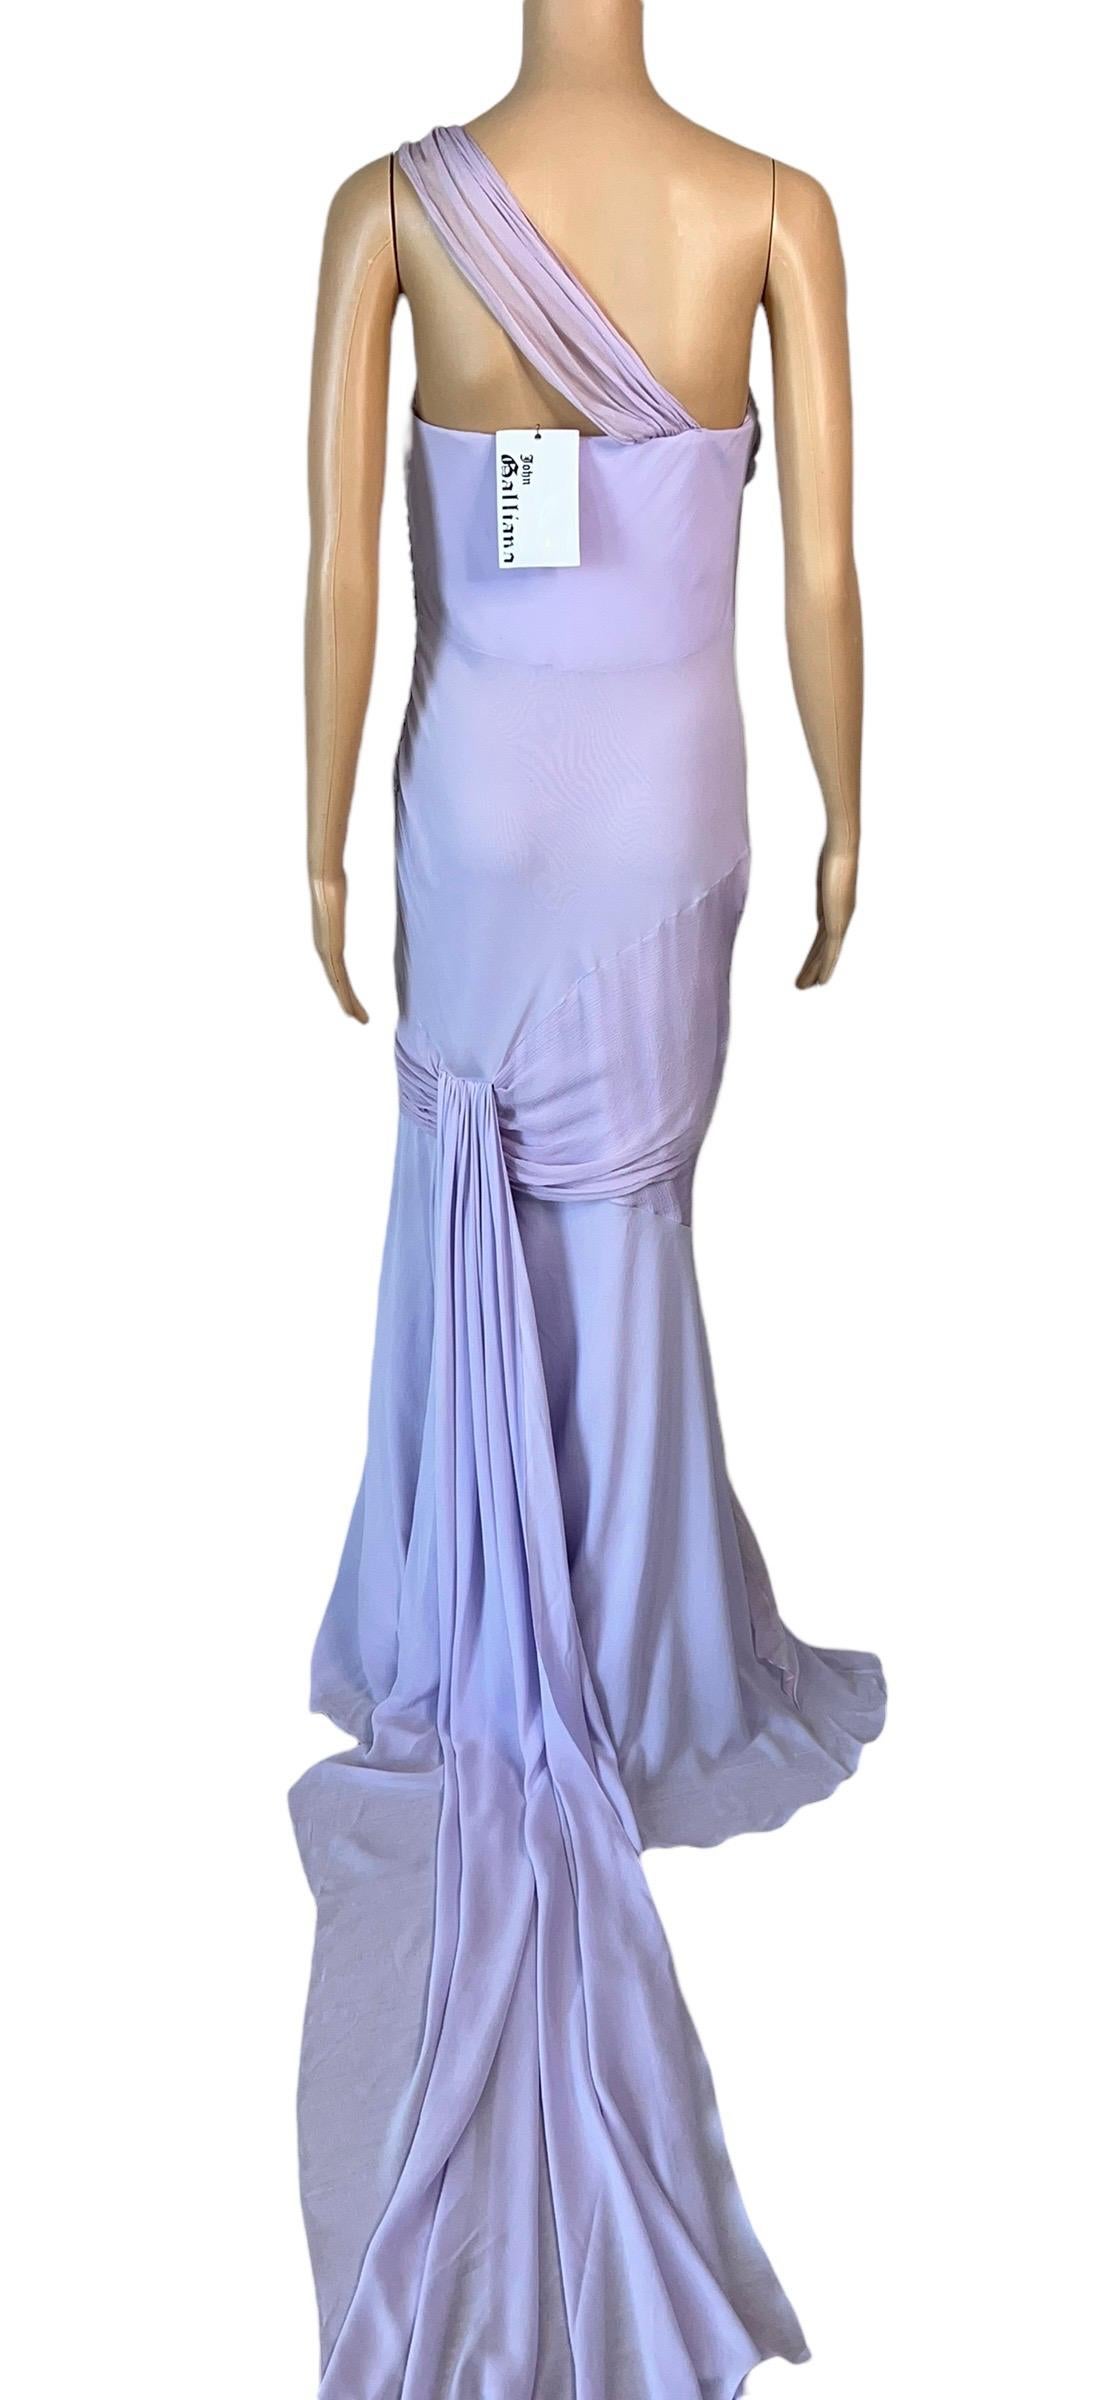 John Galliano S/S 2005 Unworn Bustier Bias Cut Silk Train Evening Dress Gown For Sale 3